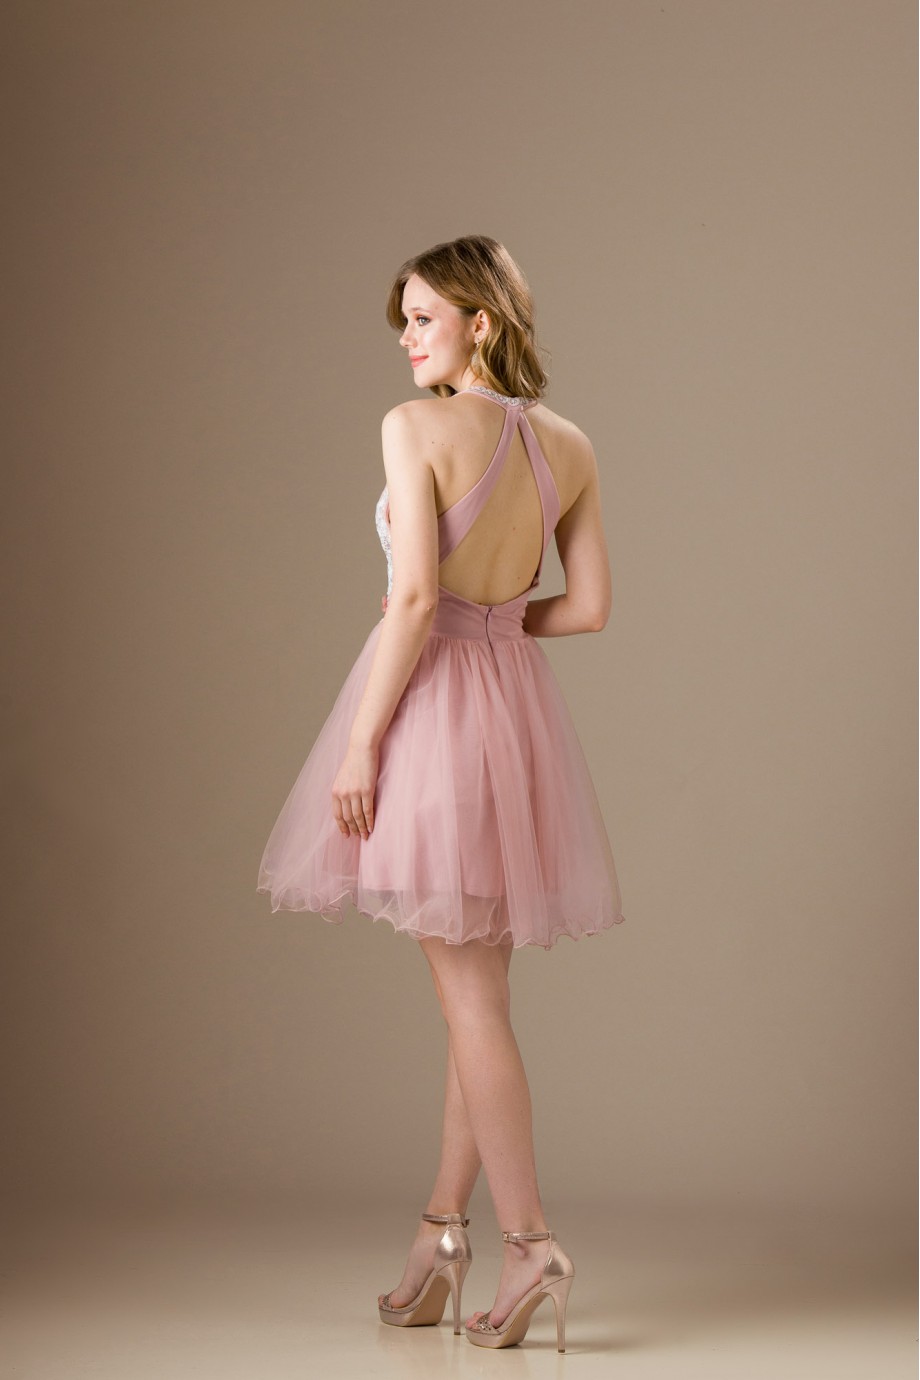 Approval methane Wet Κοντό ροζ φόρεμα με ντεκολτέ